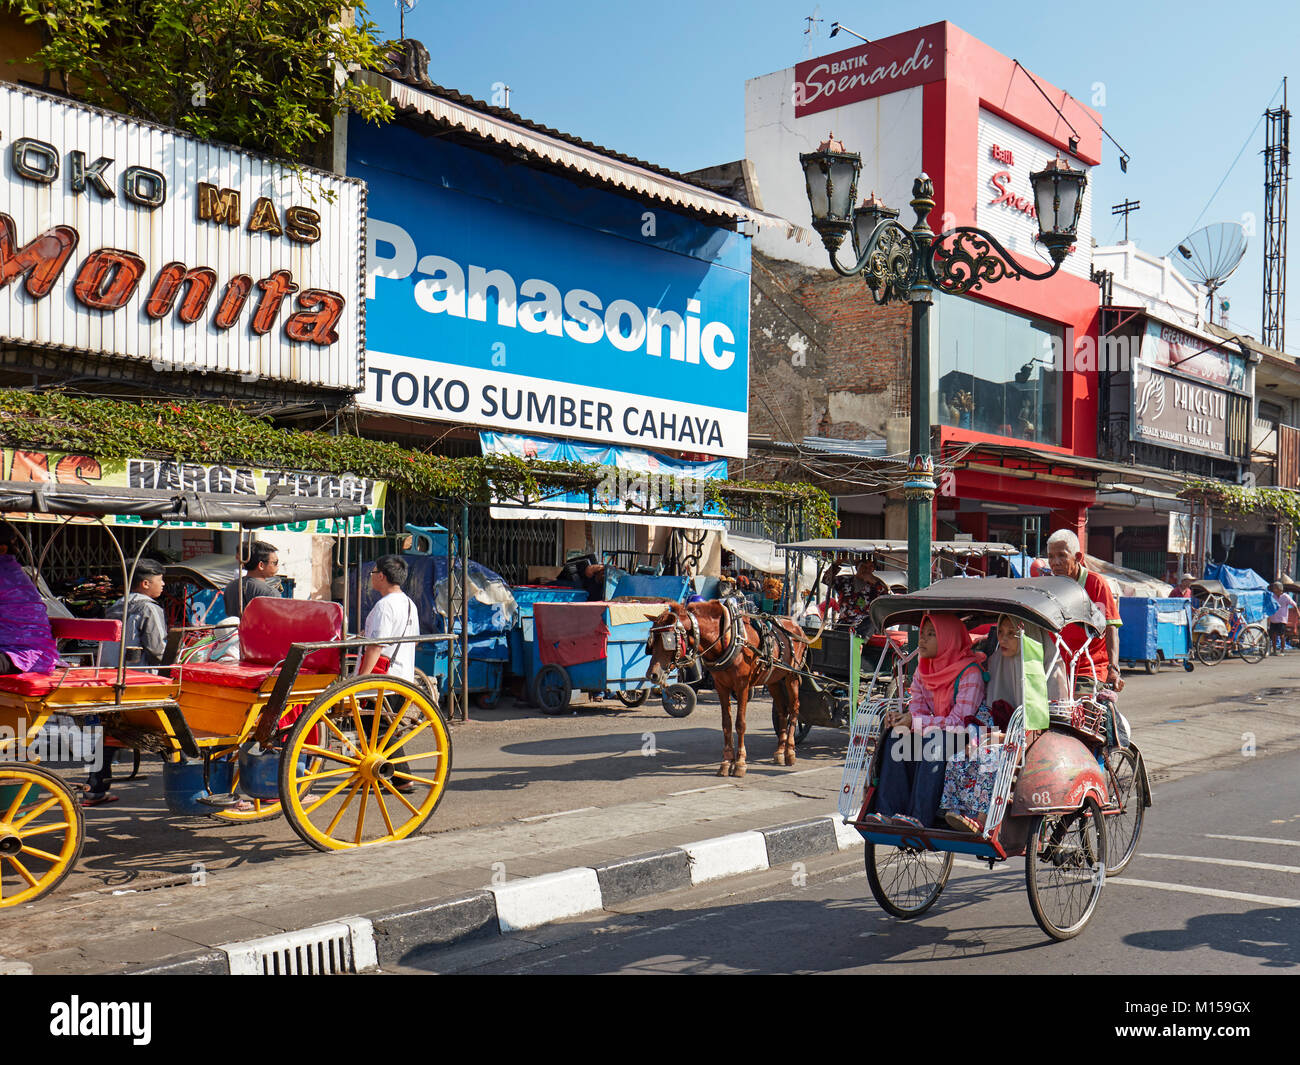 Cycle rickshaw entlang Malioboro Street fahren. Yogyakarta, Java, Indonesien. Stockfoto